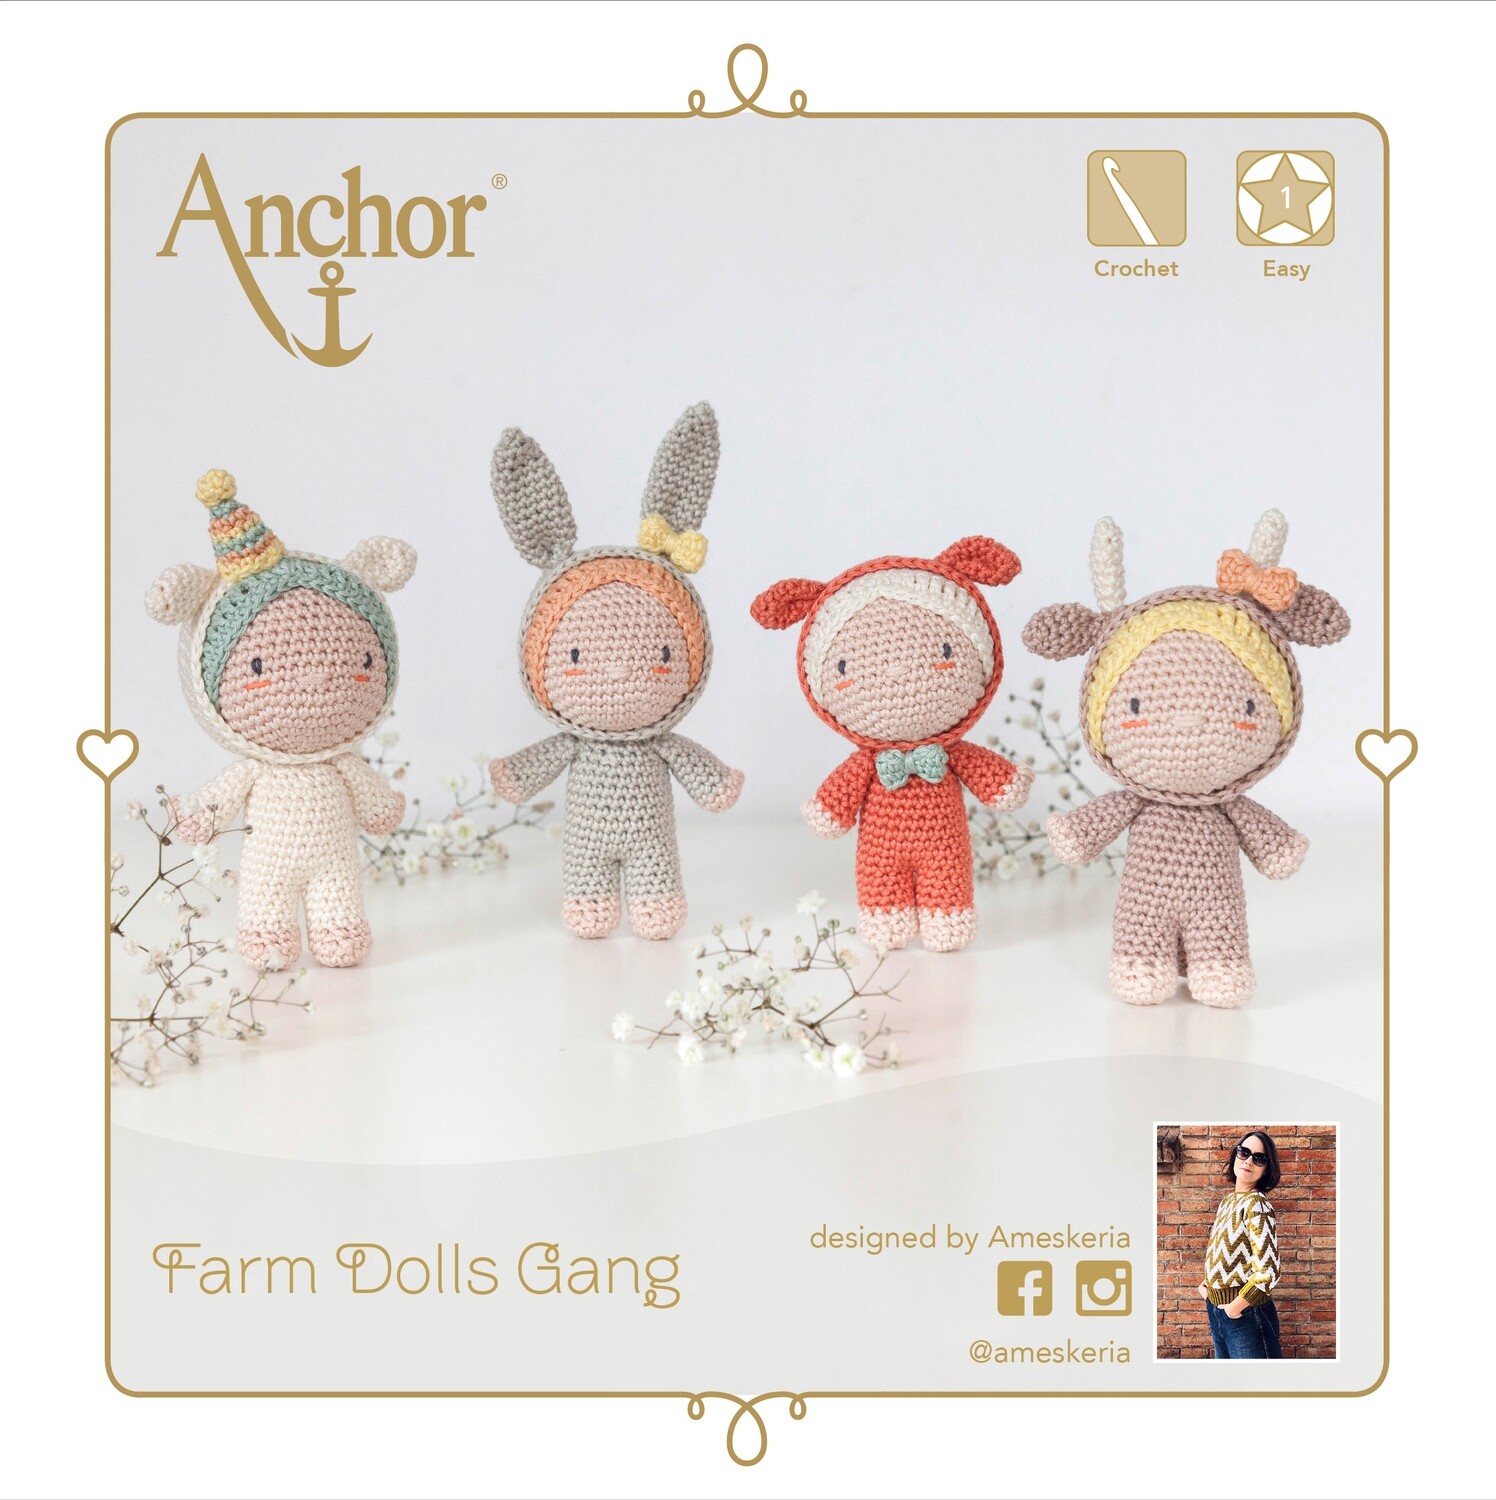 Anchor Farm Dolls Gang Crochet Kit